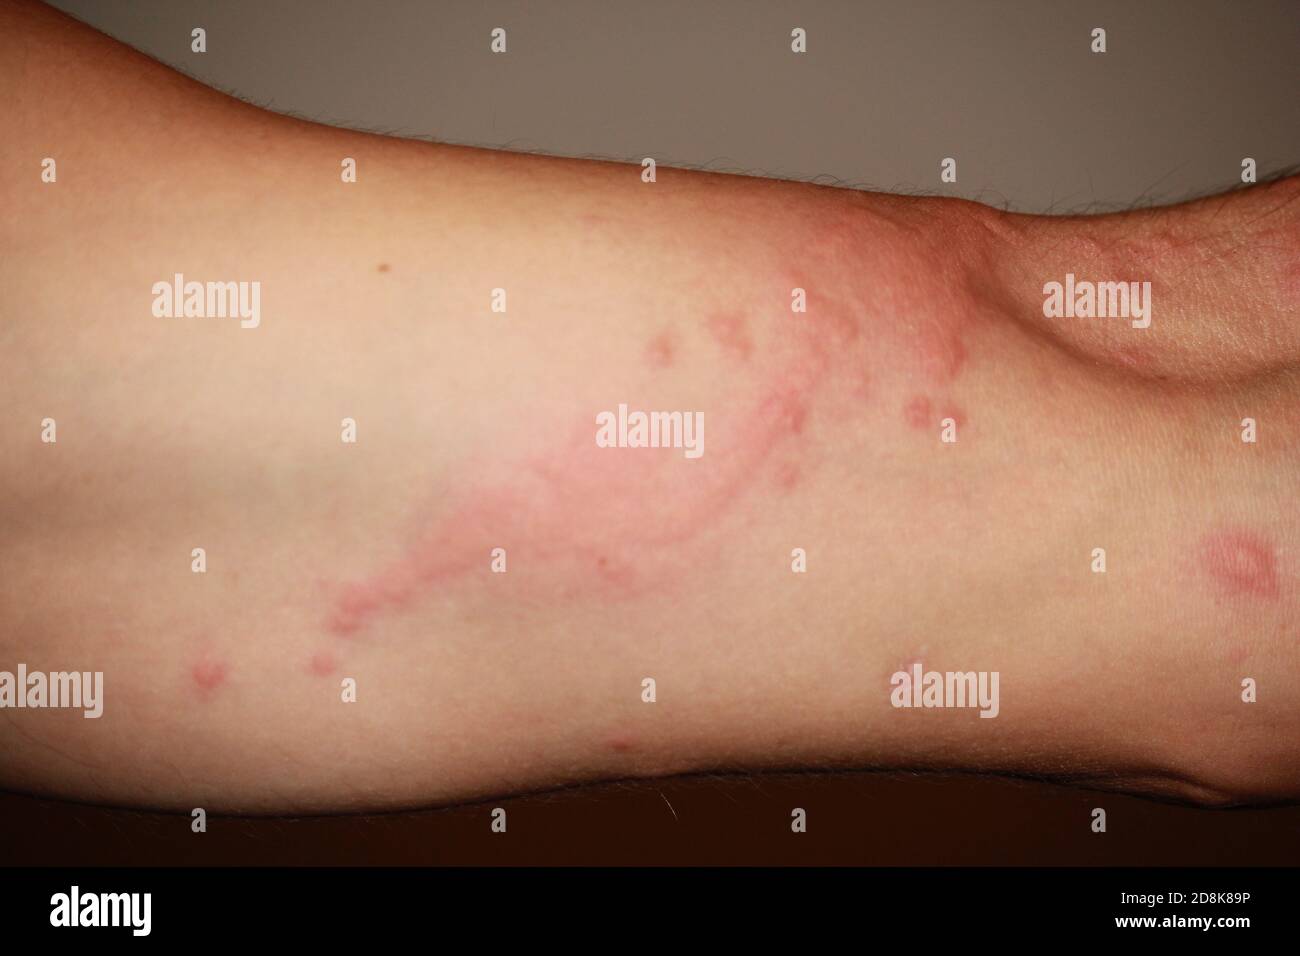 Jelly fish bites on body Stock Photo - Alamy